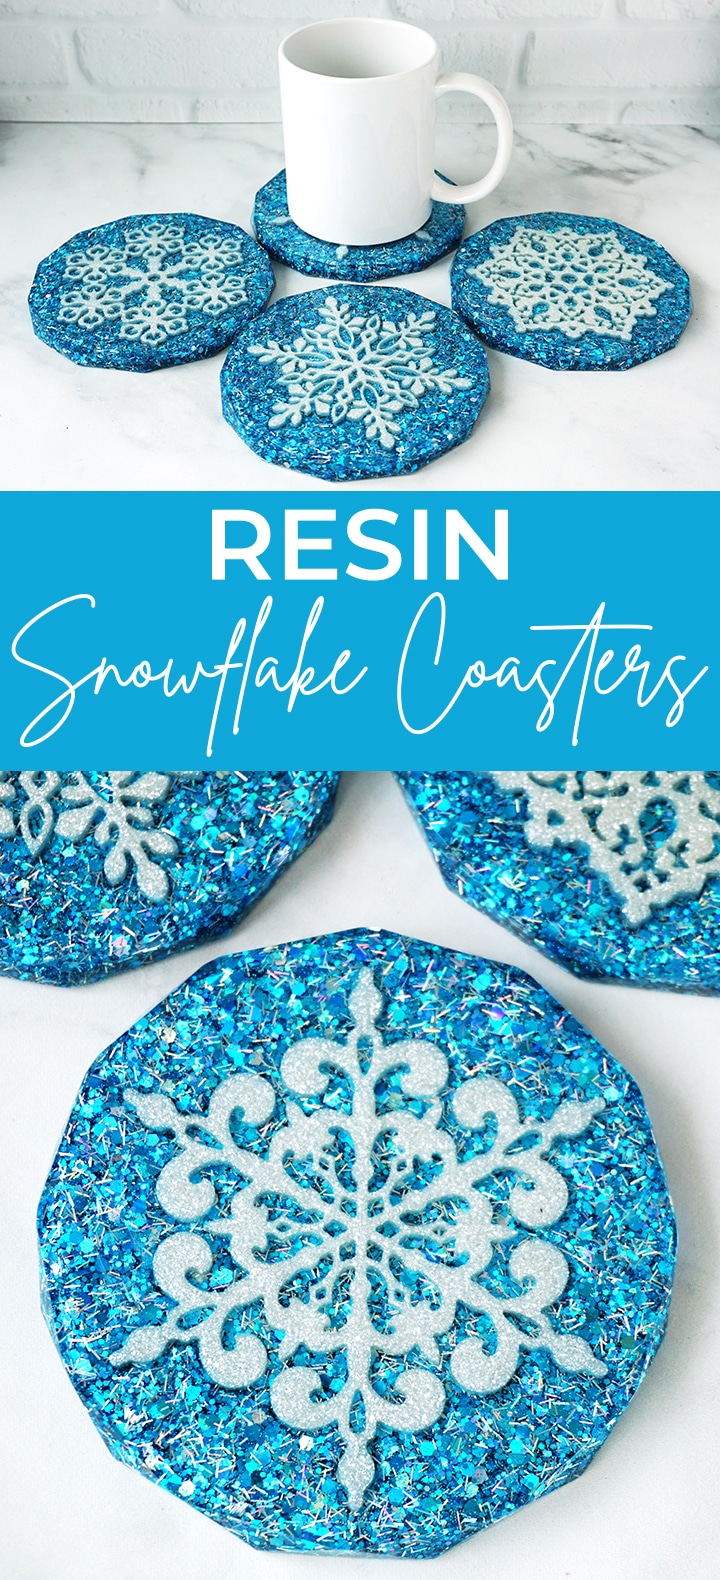 How to make resin snowflake coasters via @resincraftsblog